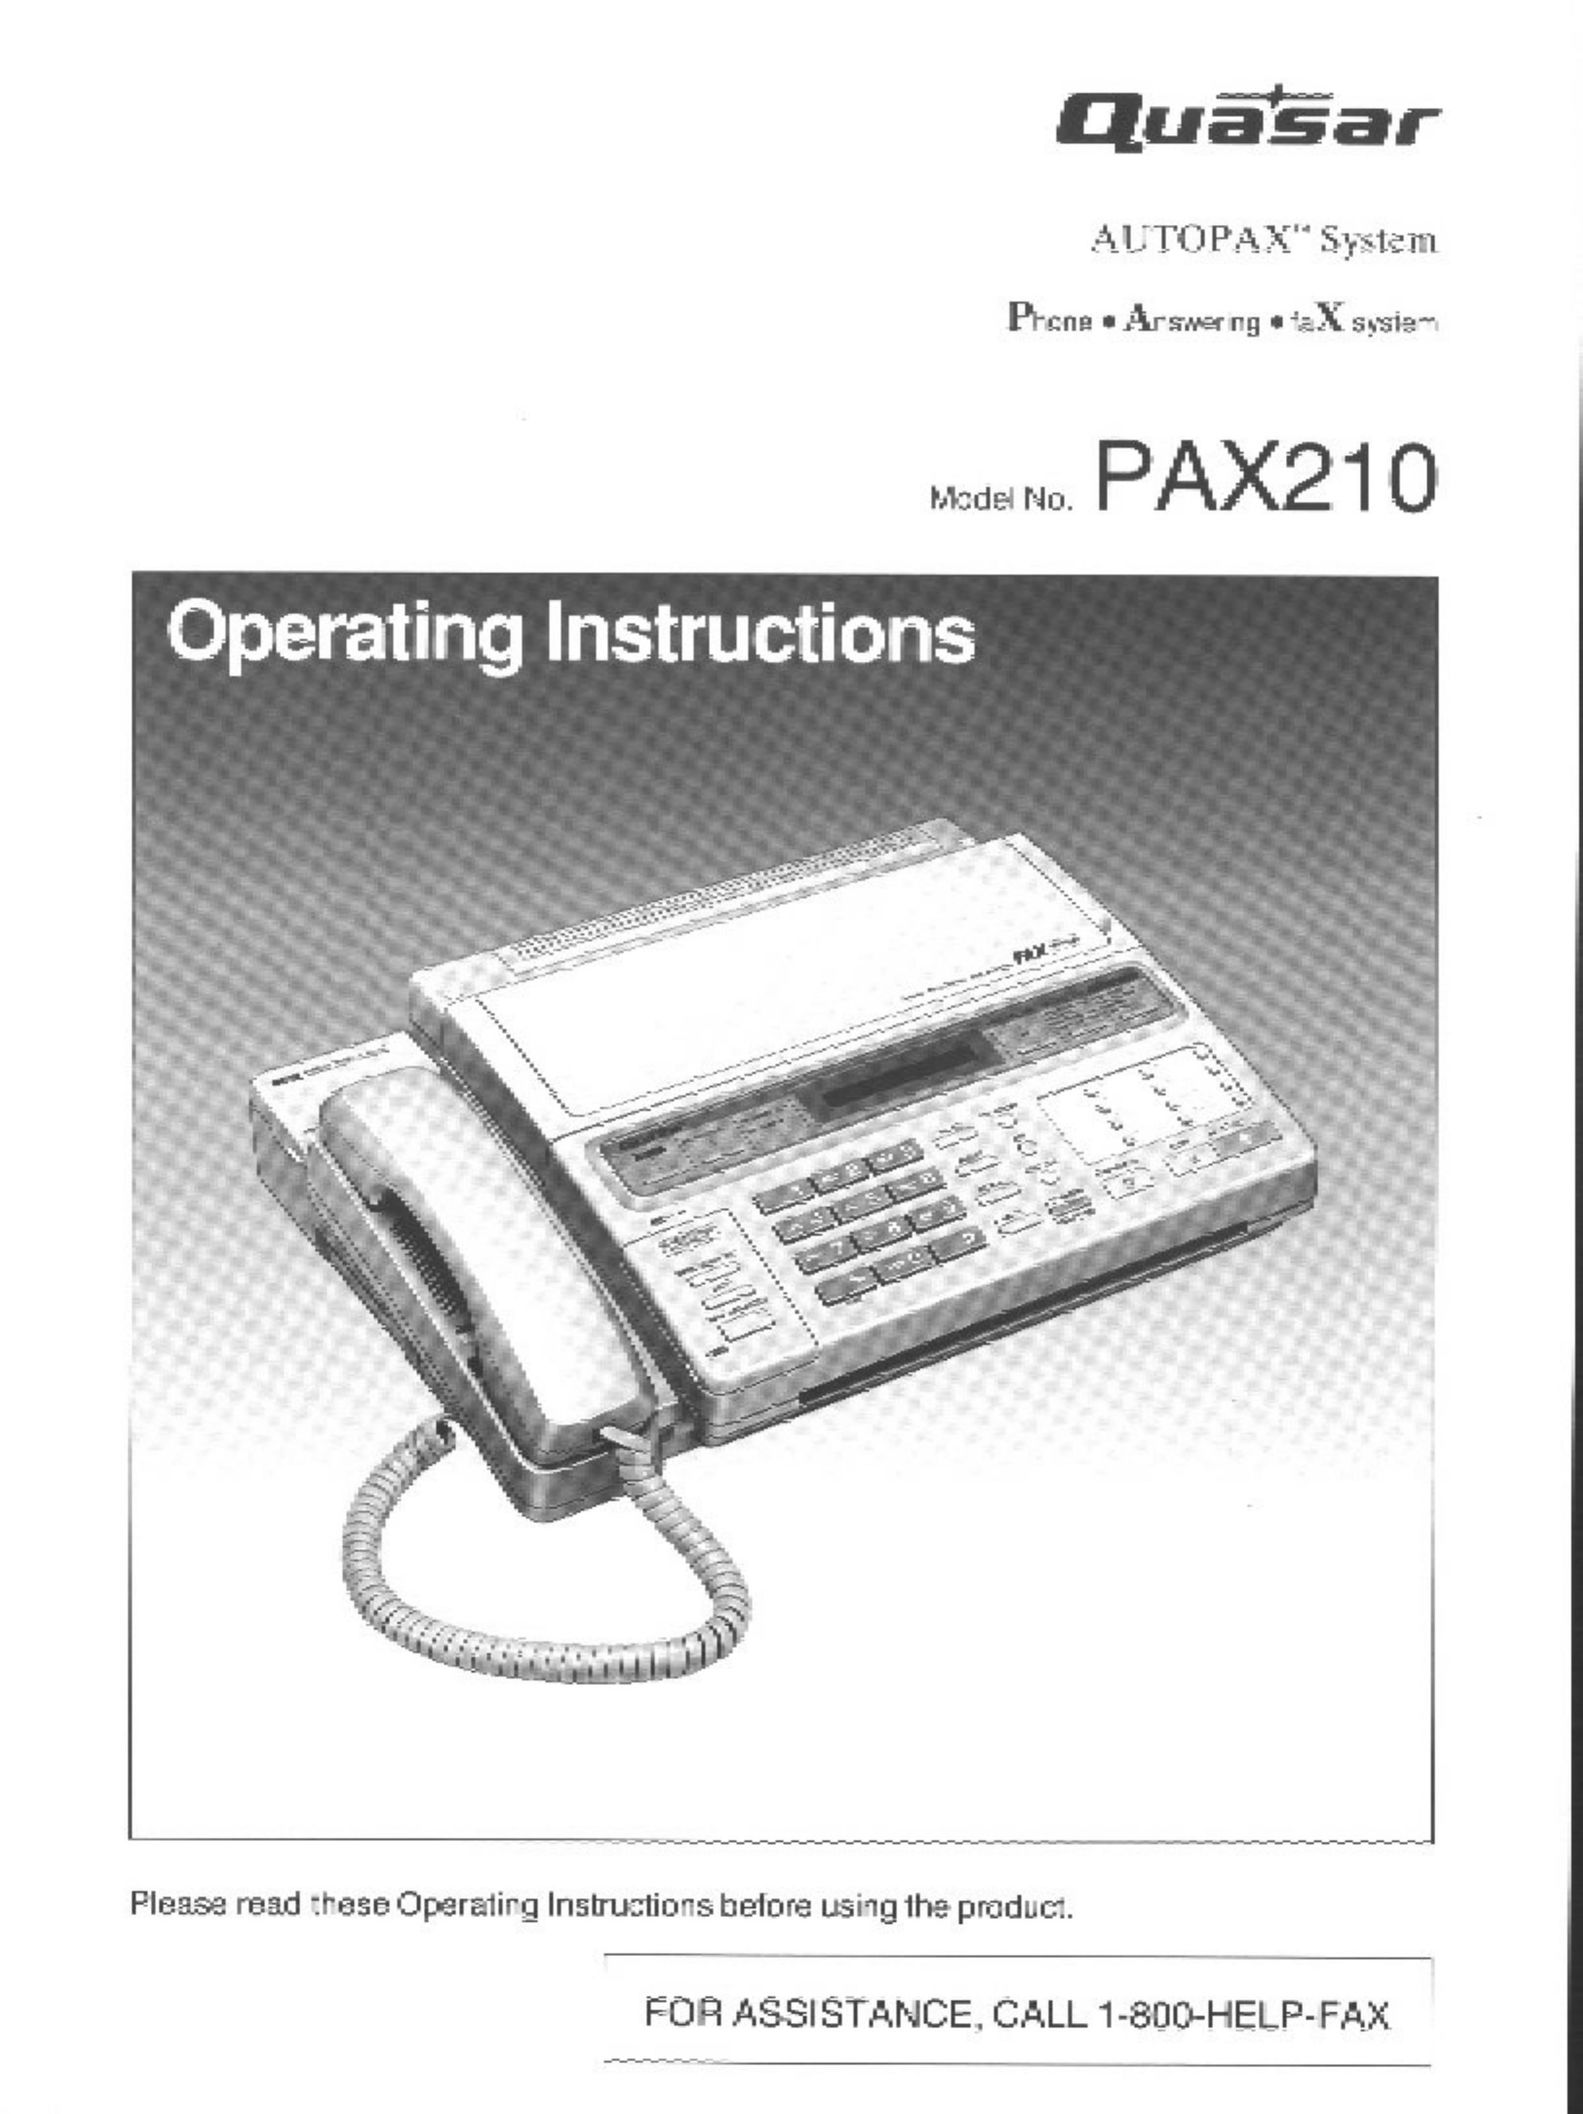 Quasar PAX210 Answering Machine User Manual